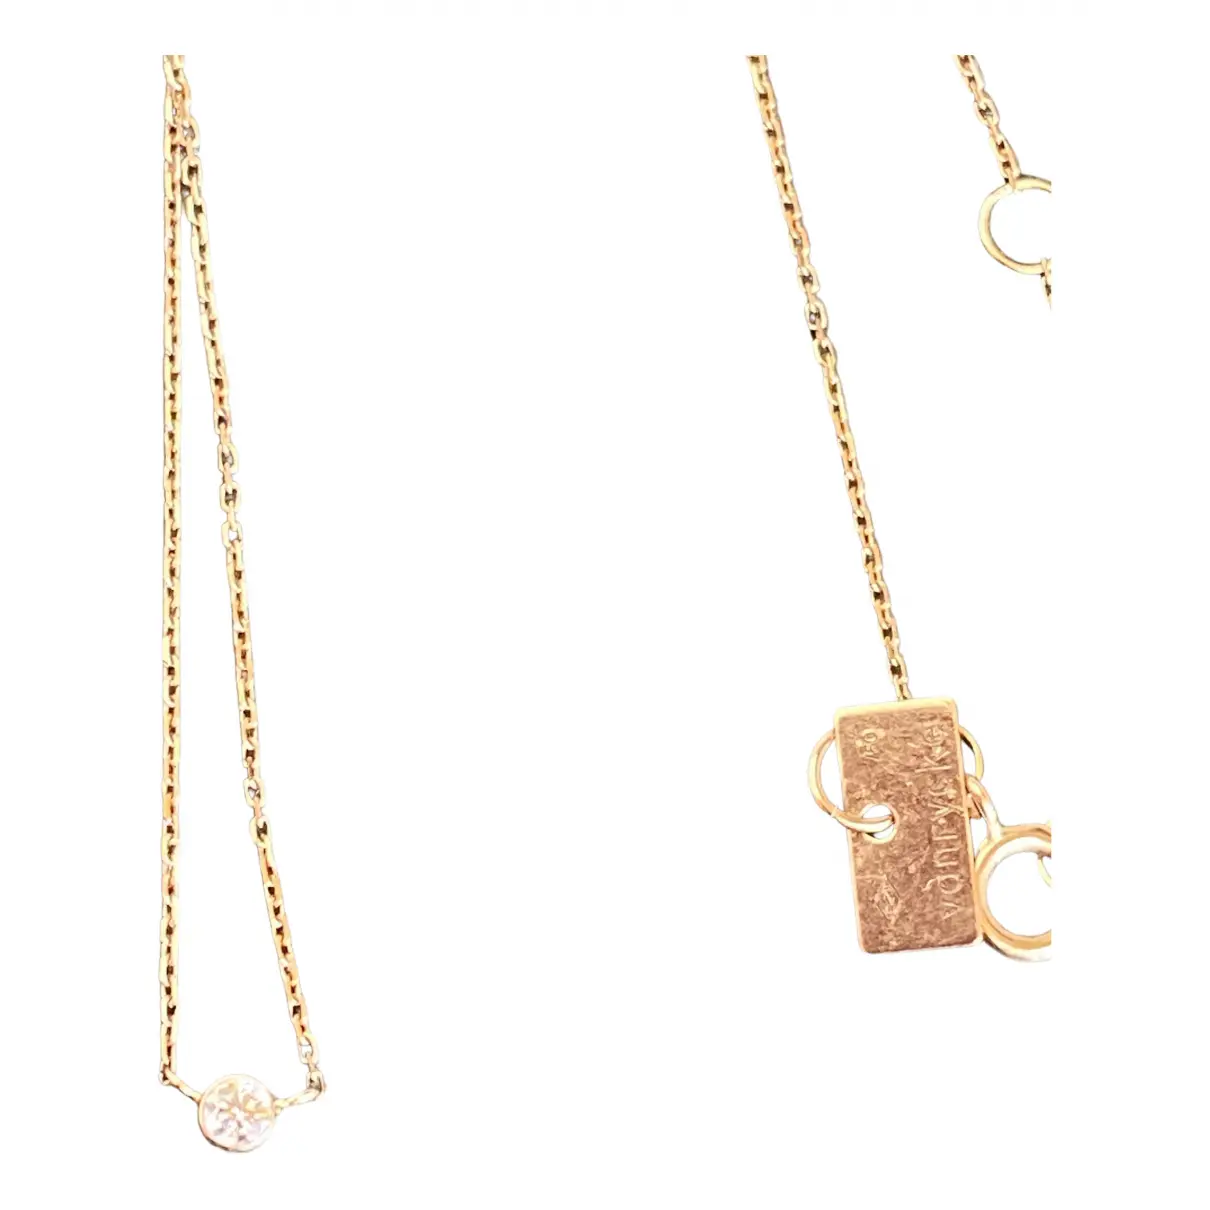 Buy Vanrycke Pink gold necklace online